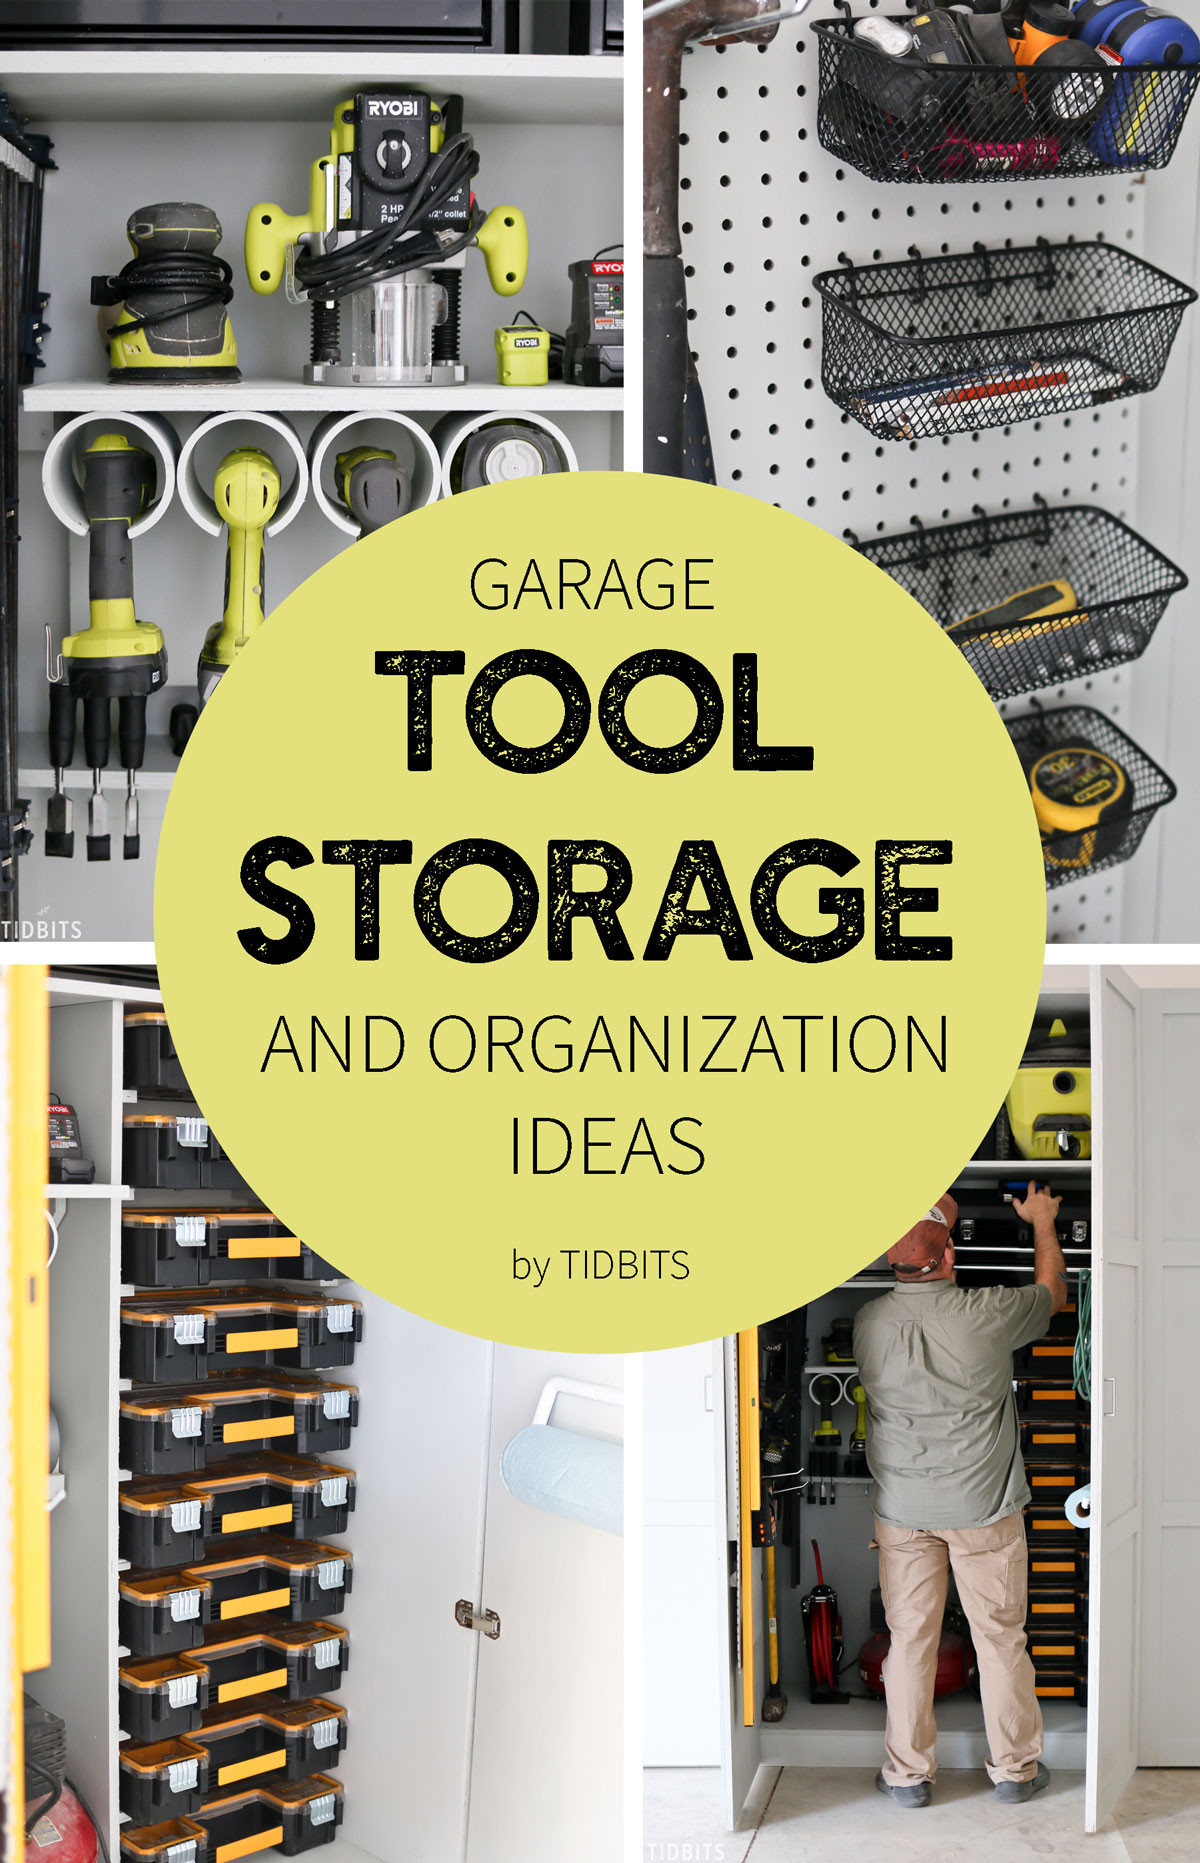 Garage Tool Organization Ideas
 Garage Tool Storage and Organization Ideas Tidbits